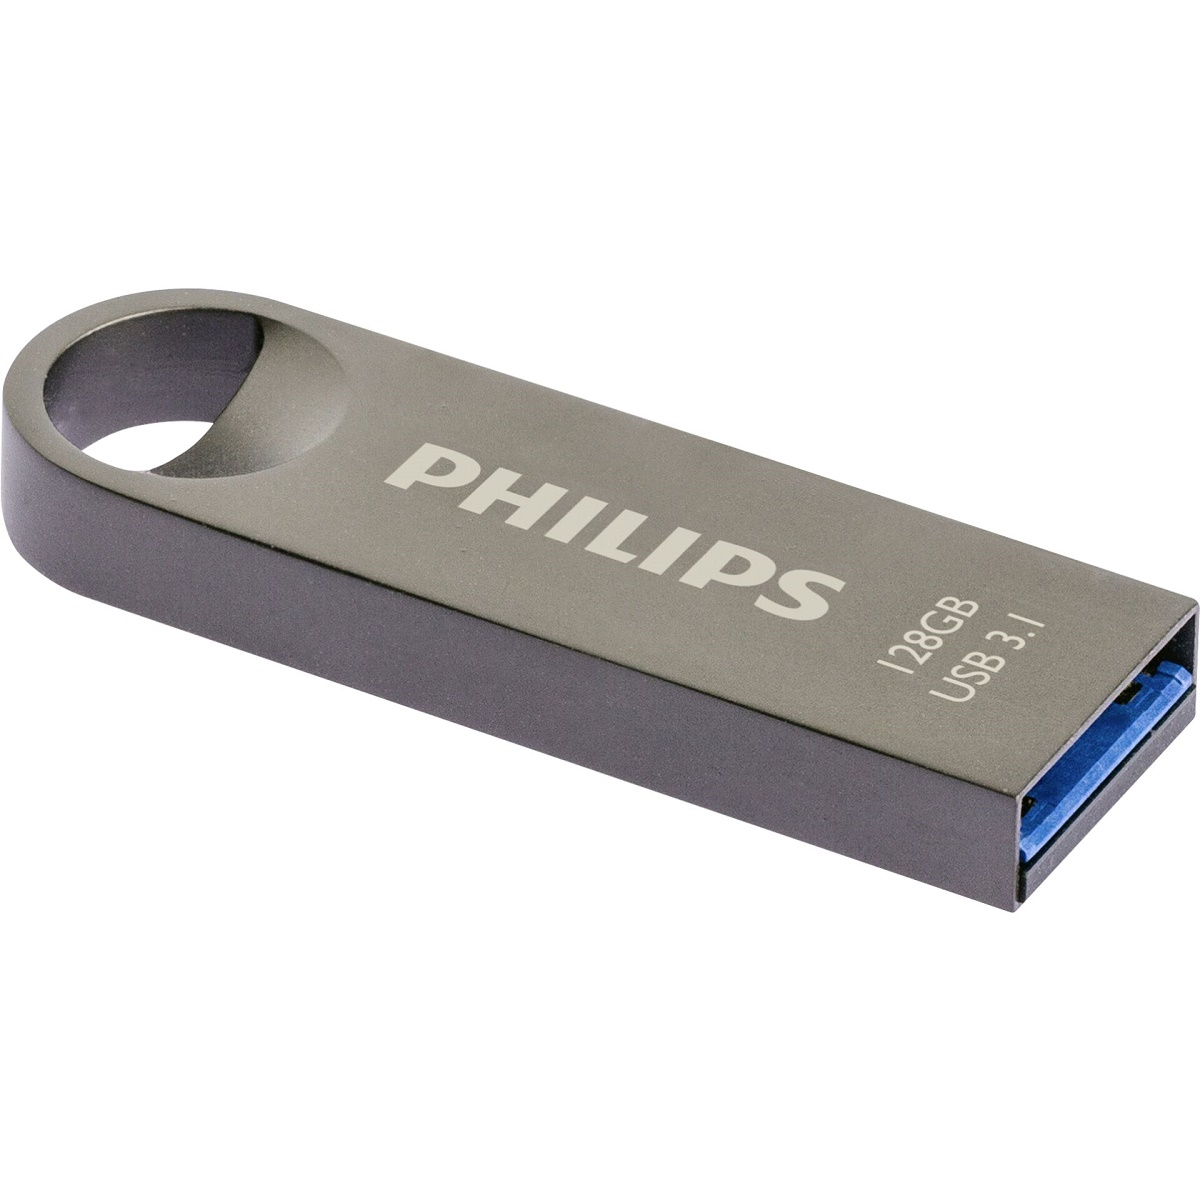 Moon USB GB) 128 USB-Stick (grau, PHILIPS 3.1 Space 128GB Grey